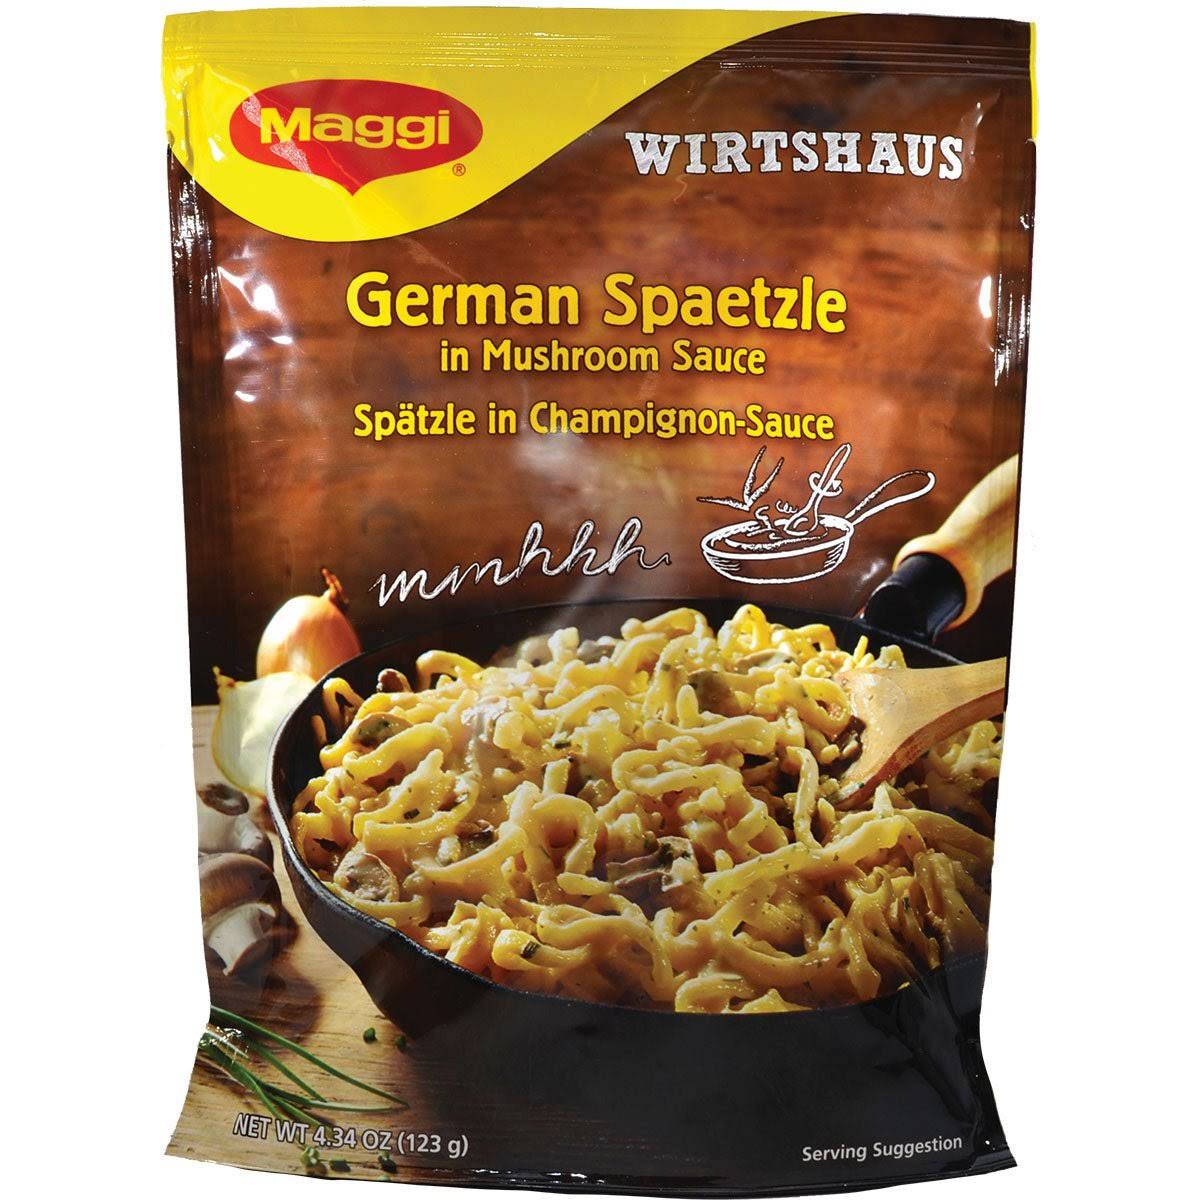 Maggi German Spaetzle in Mushroom Sauce